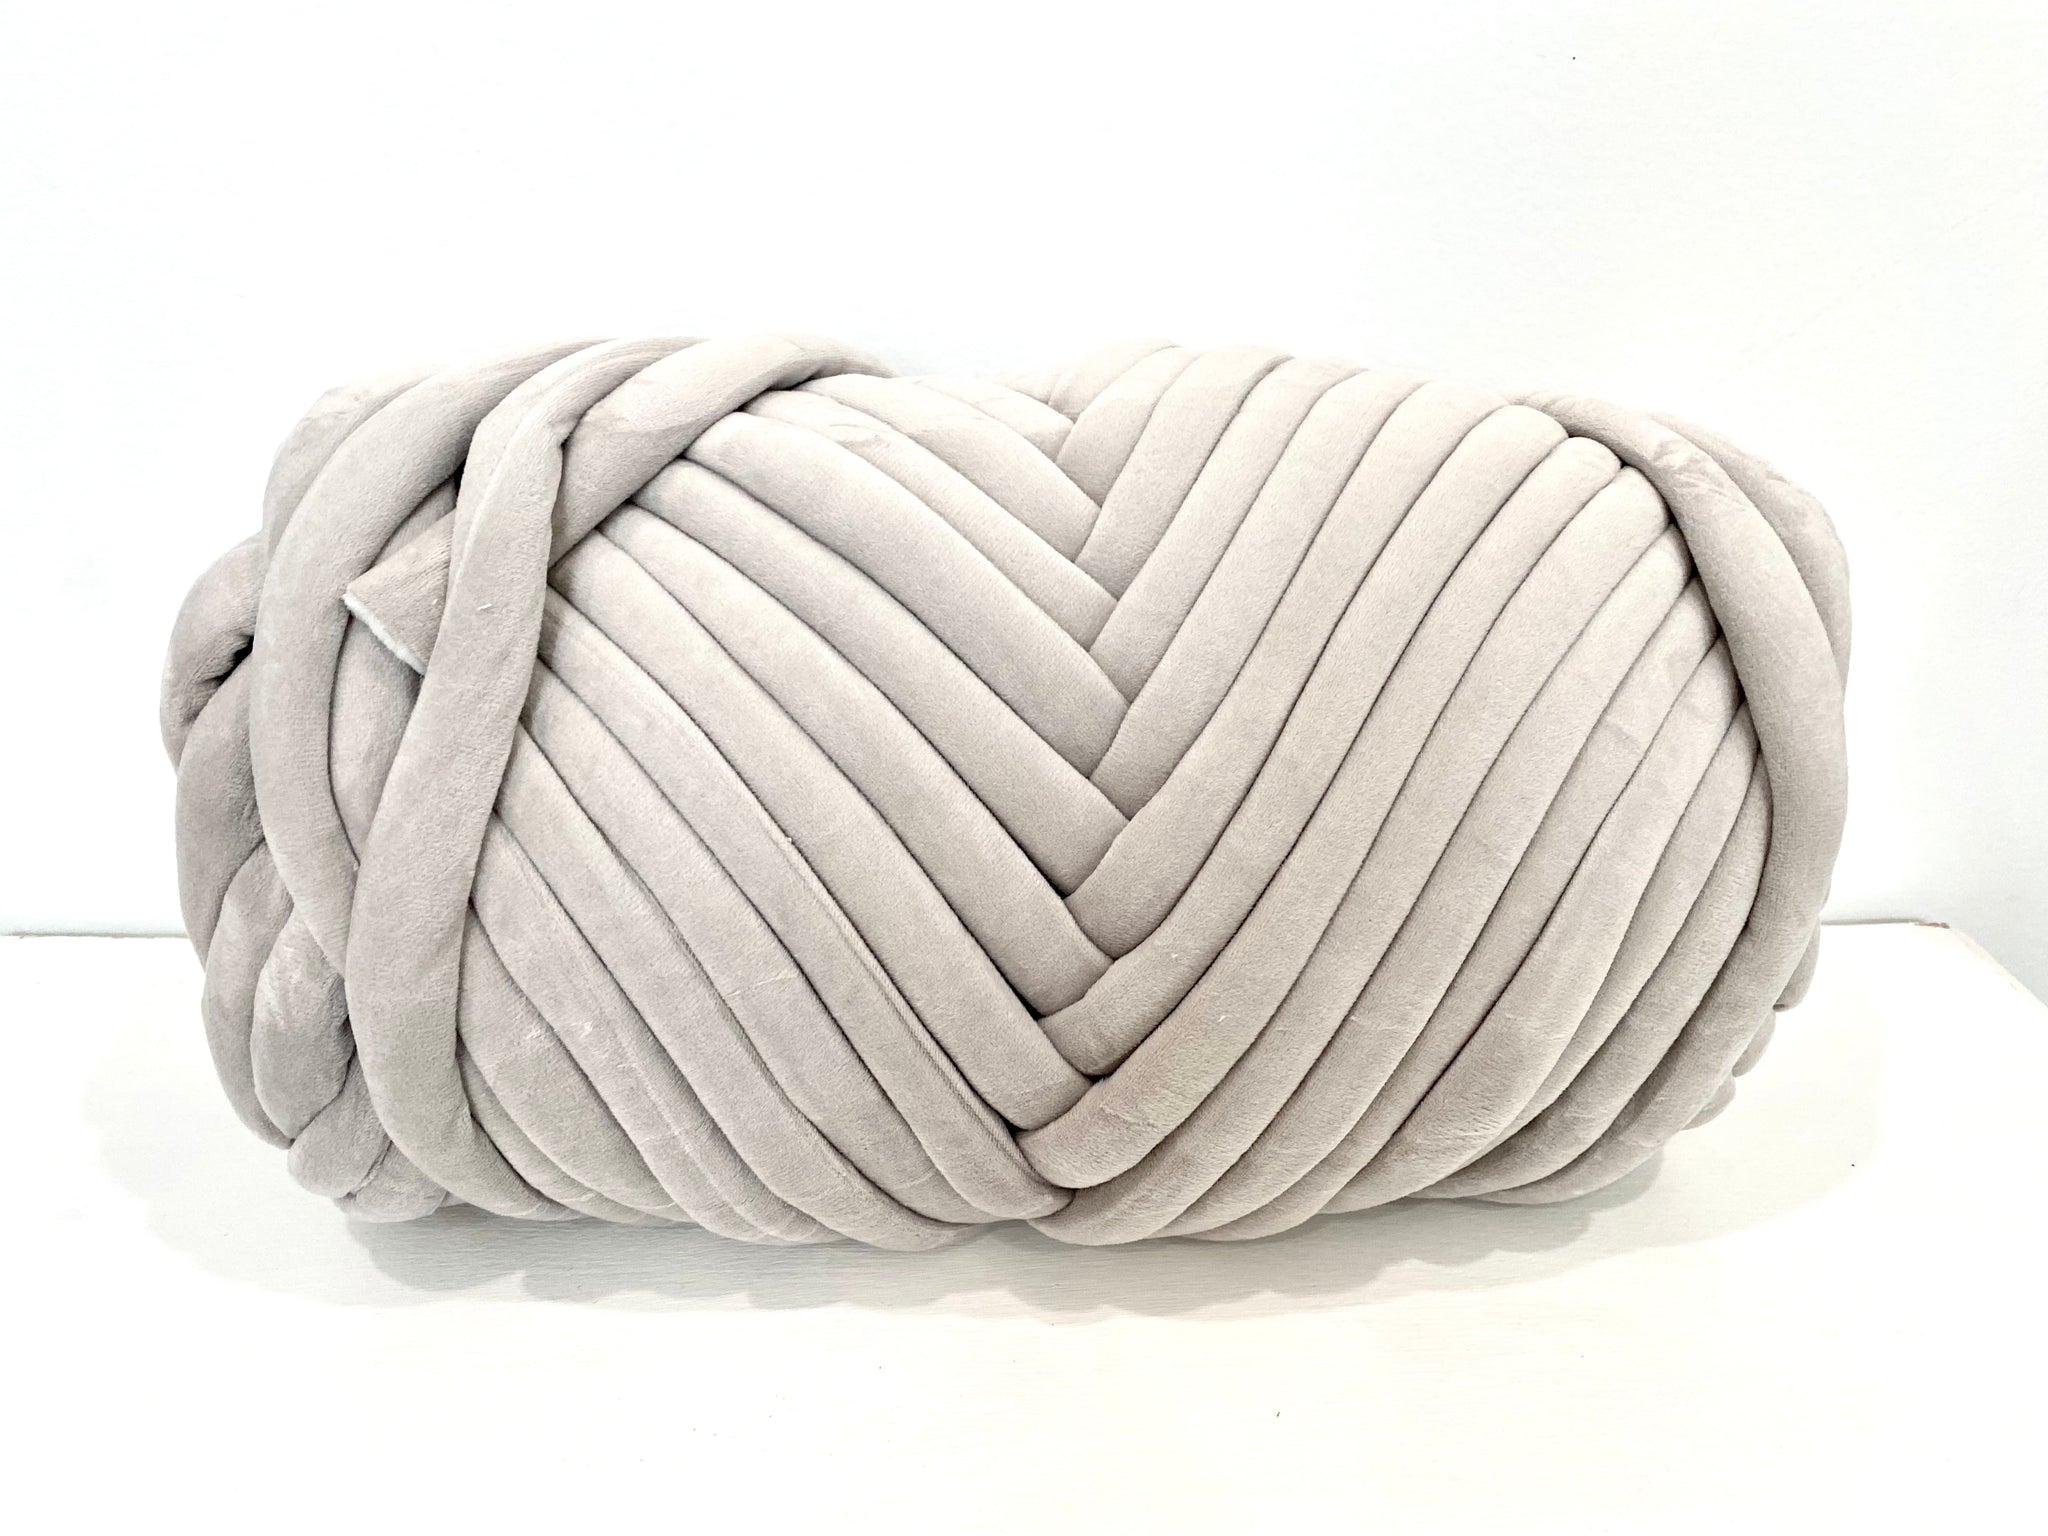 POYOGA 50g/Ball DIY Fluffy Plush Chunky Knitting Yarn Hand-Woven Crochet  Velvet Thread 